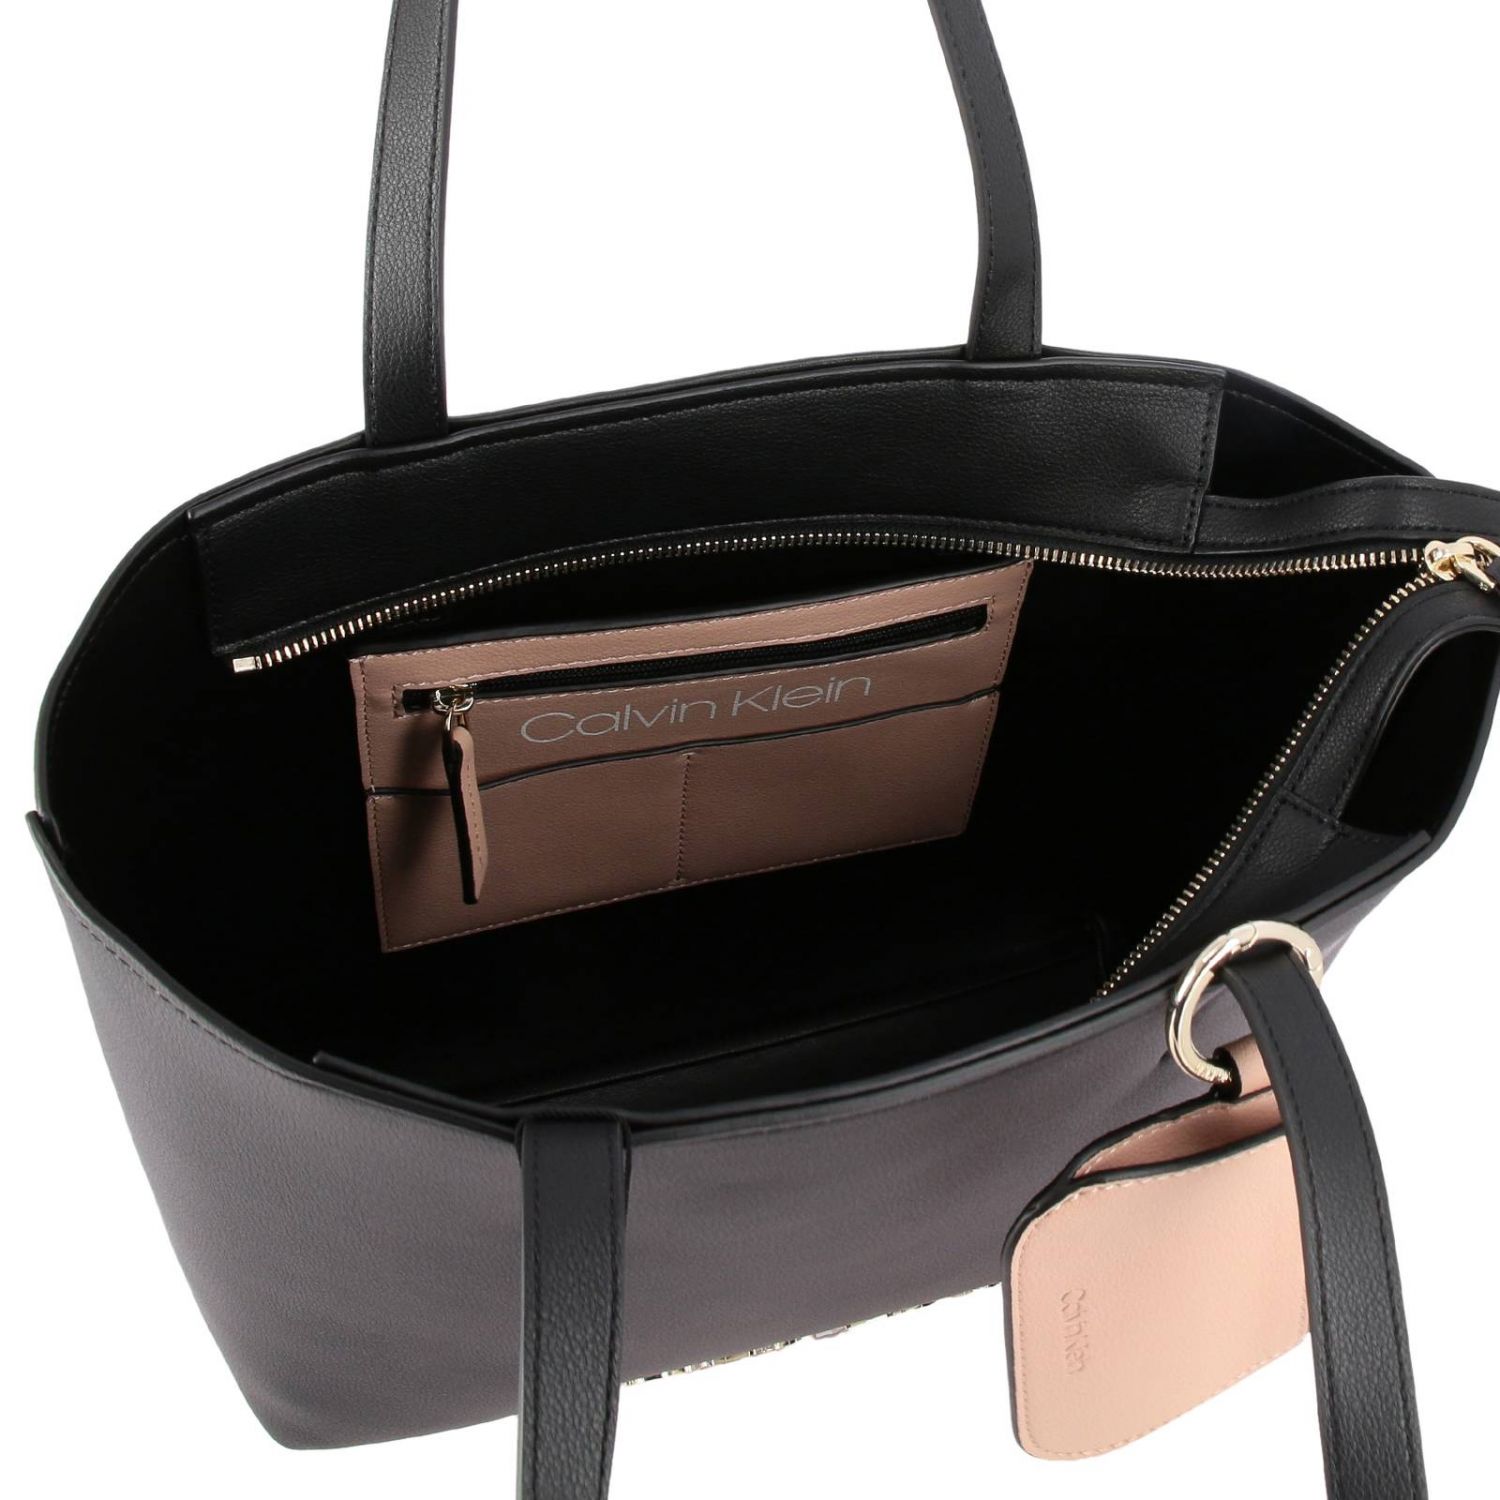 ck leather travel bag